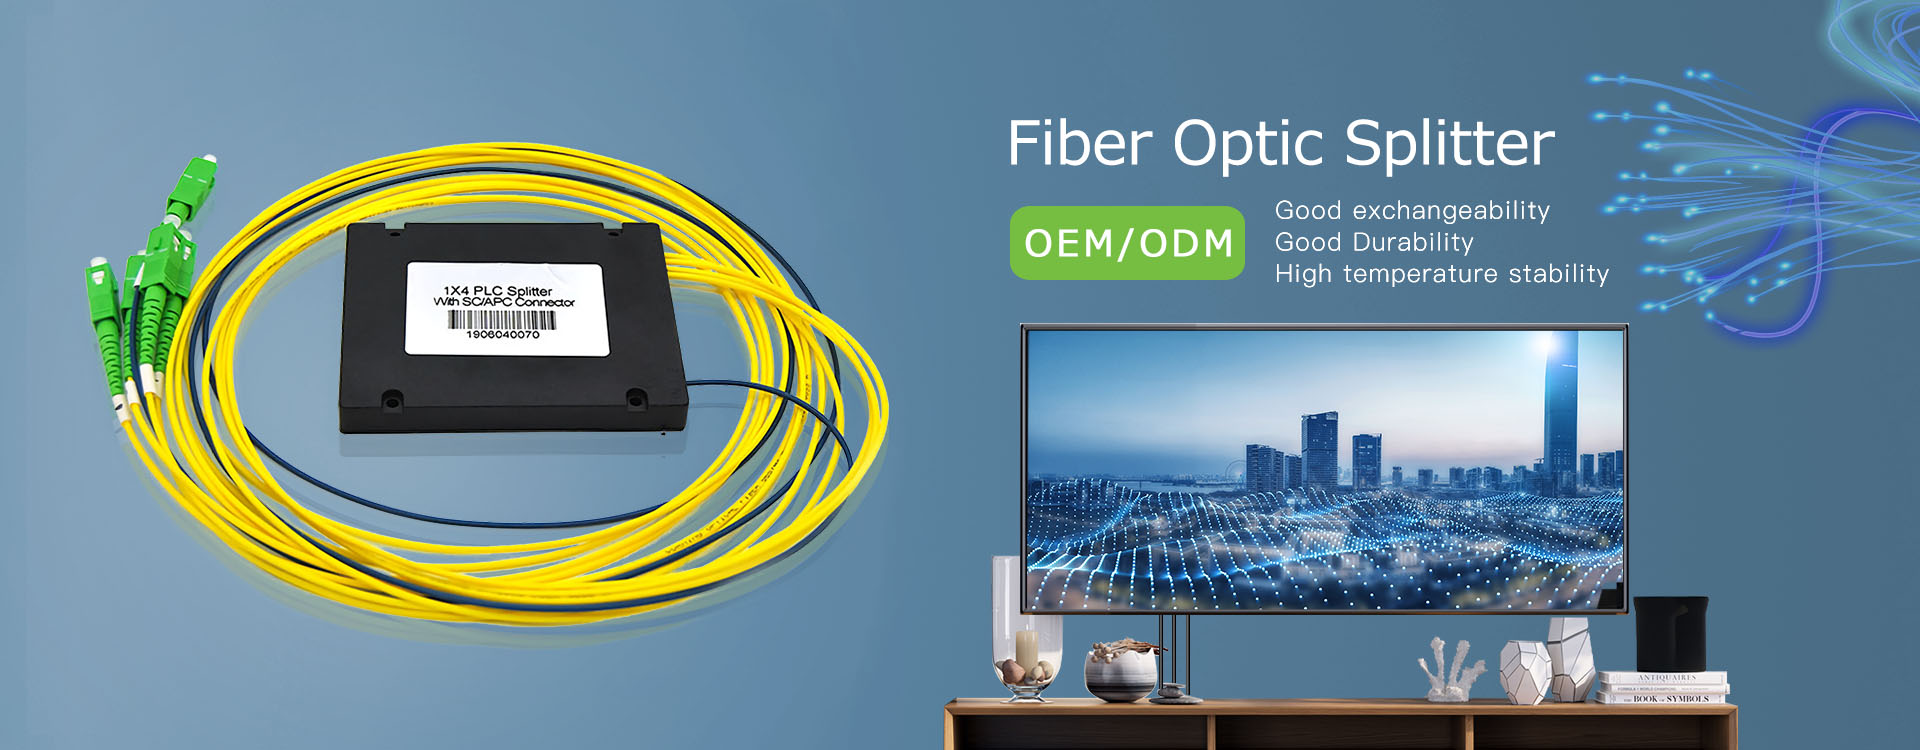 Ultimo design di splitter in fibra ottica di alta precisione di vendita per i clienti